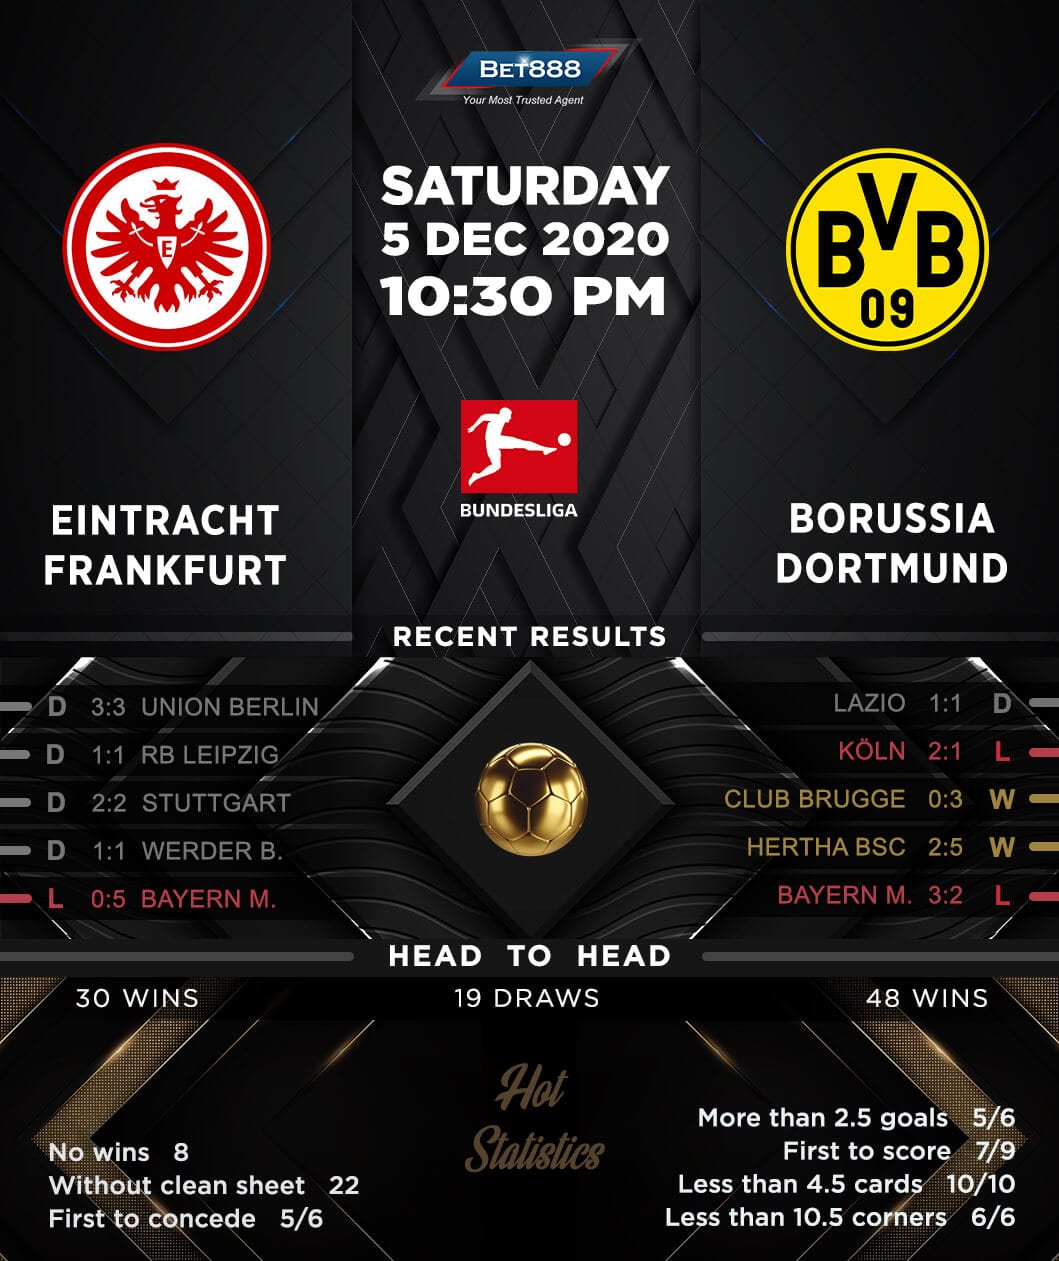 Bet888win: Eintracht Frankfurt vs. Borussia Dortmund 05/12/20